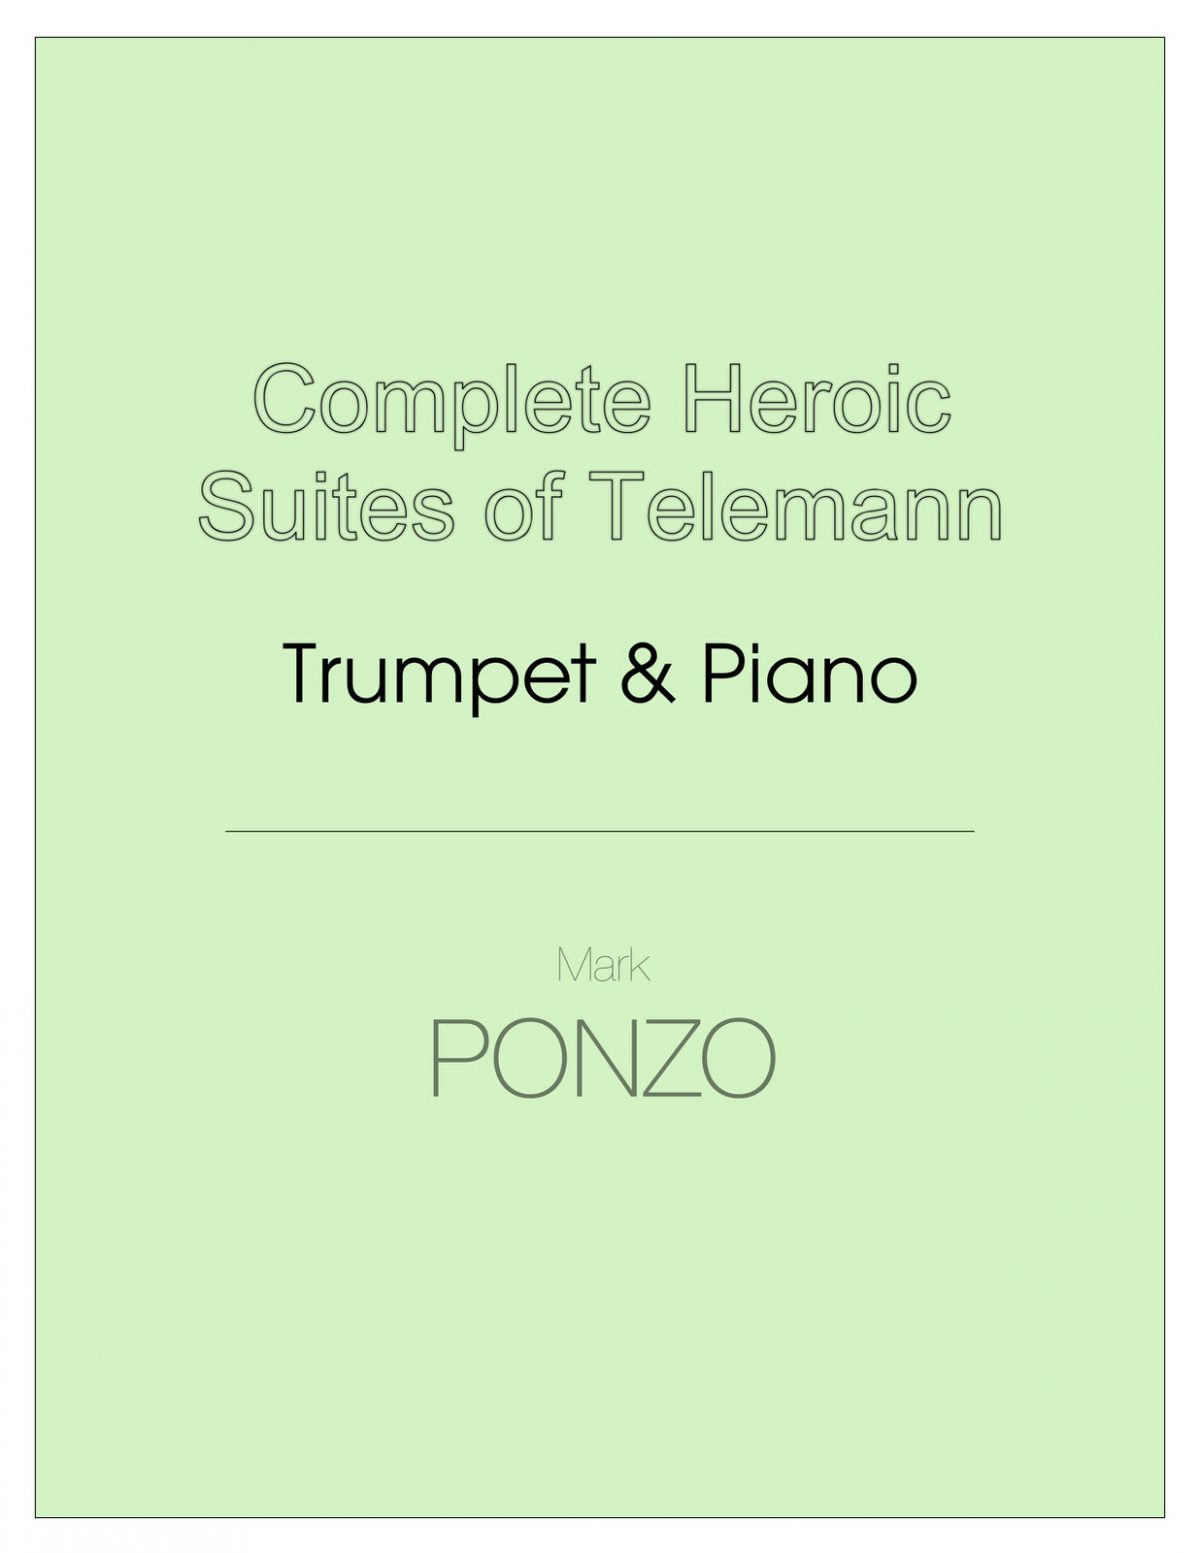 Ponzo, Complete Heroic Suites of Telemann